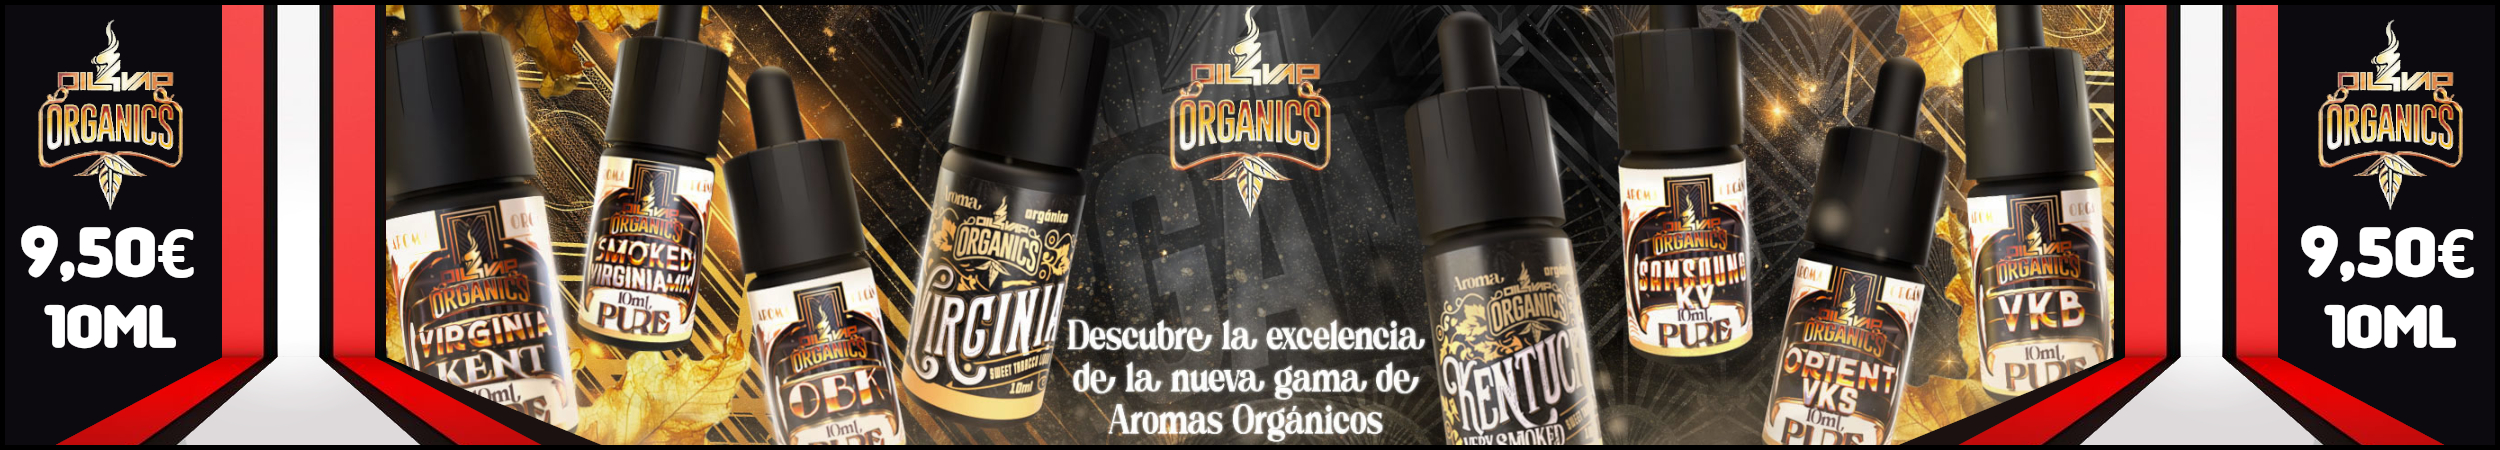 organics oil4vaPp